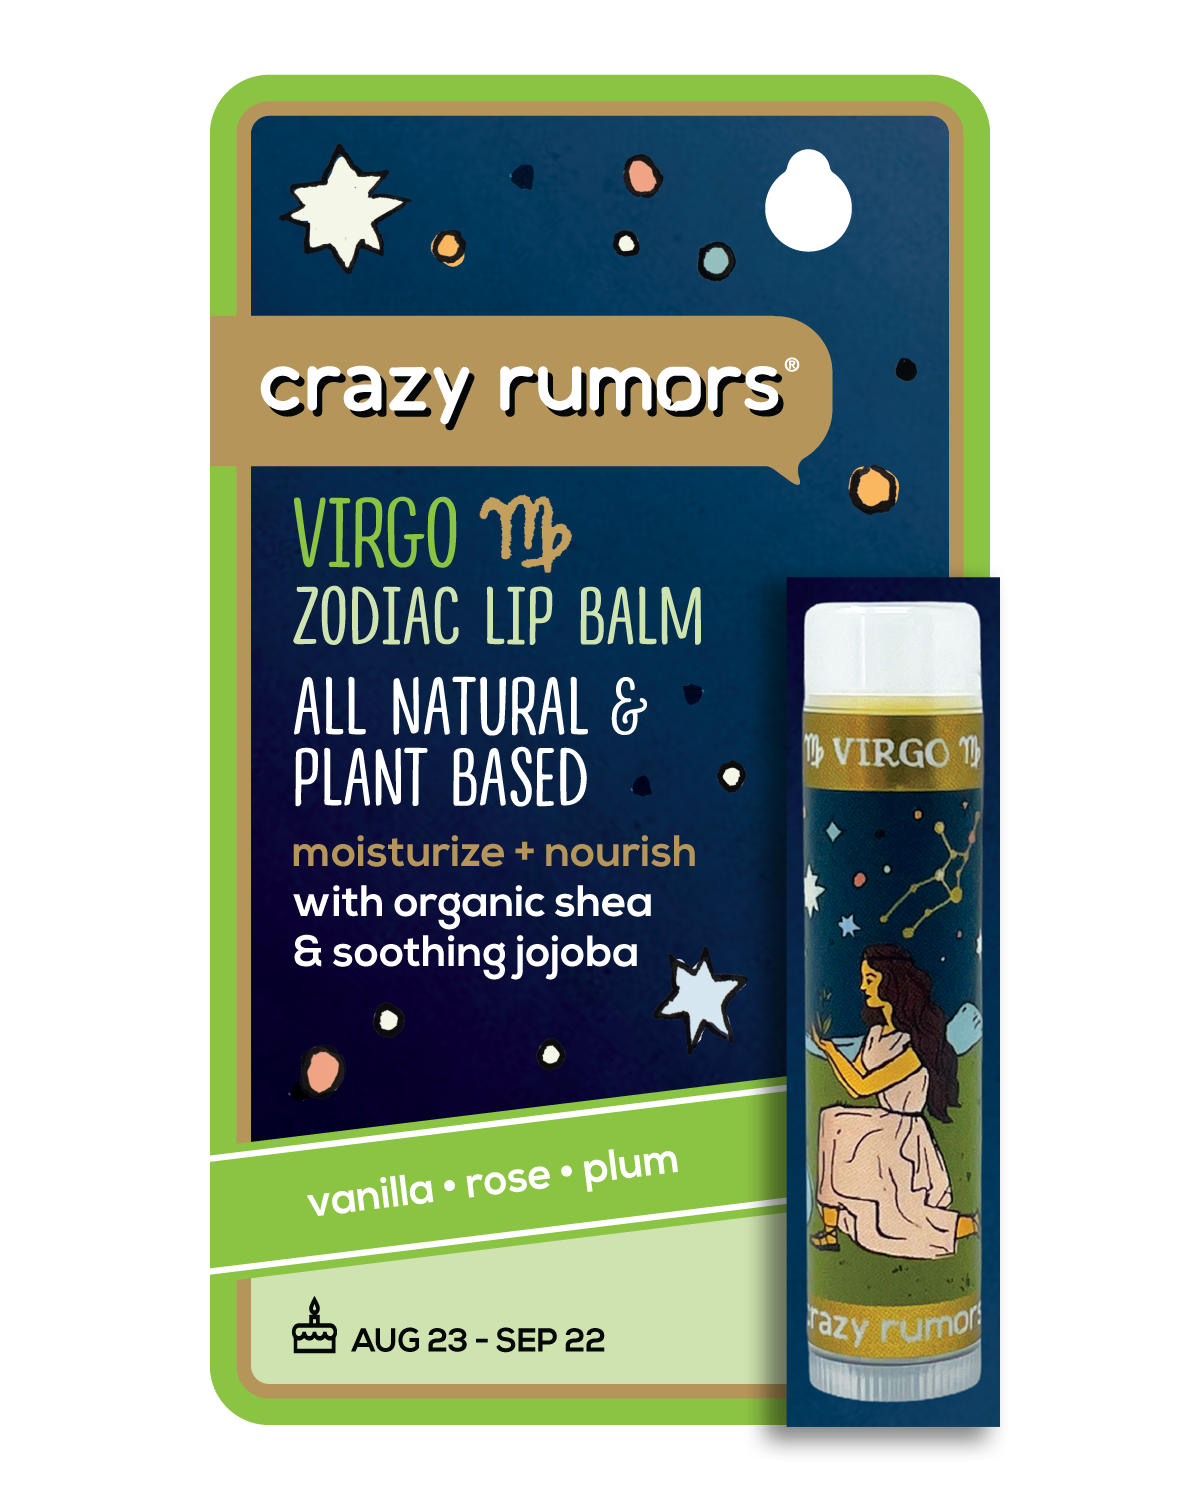 Crazy Rumors - Virgo, Zodiac Lip Balm